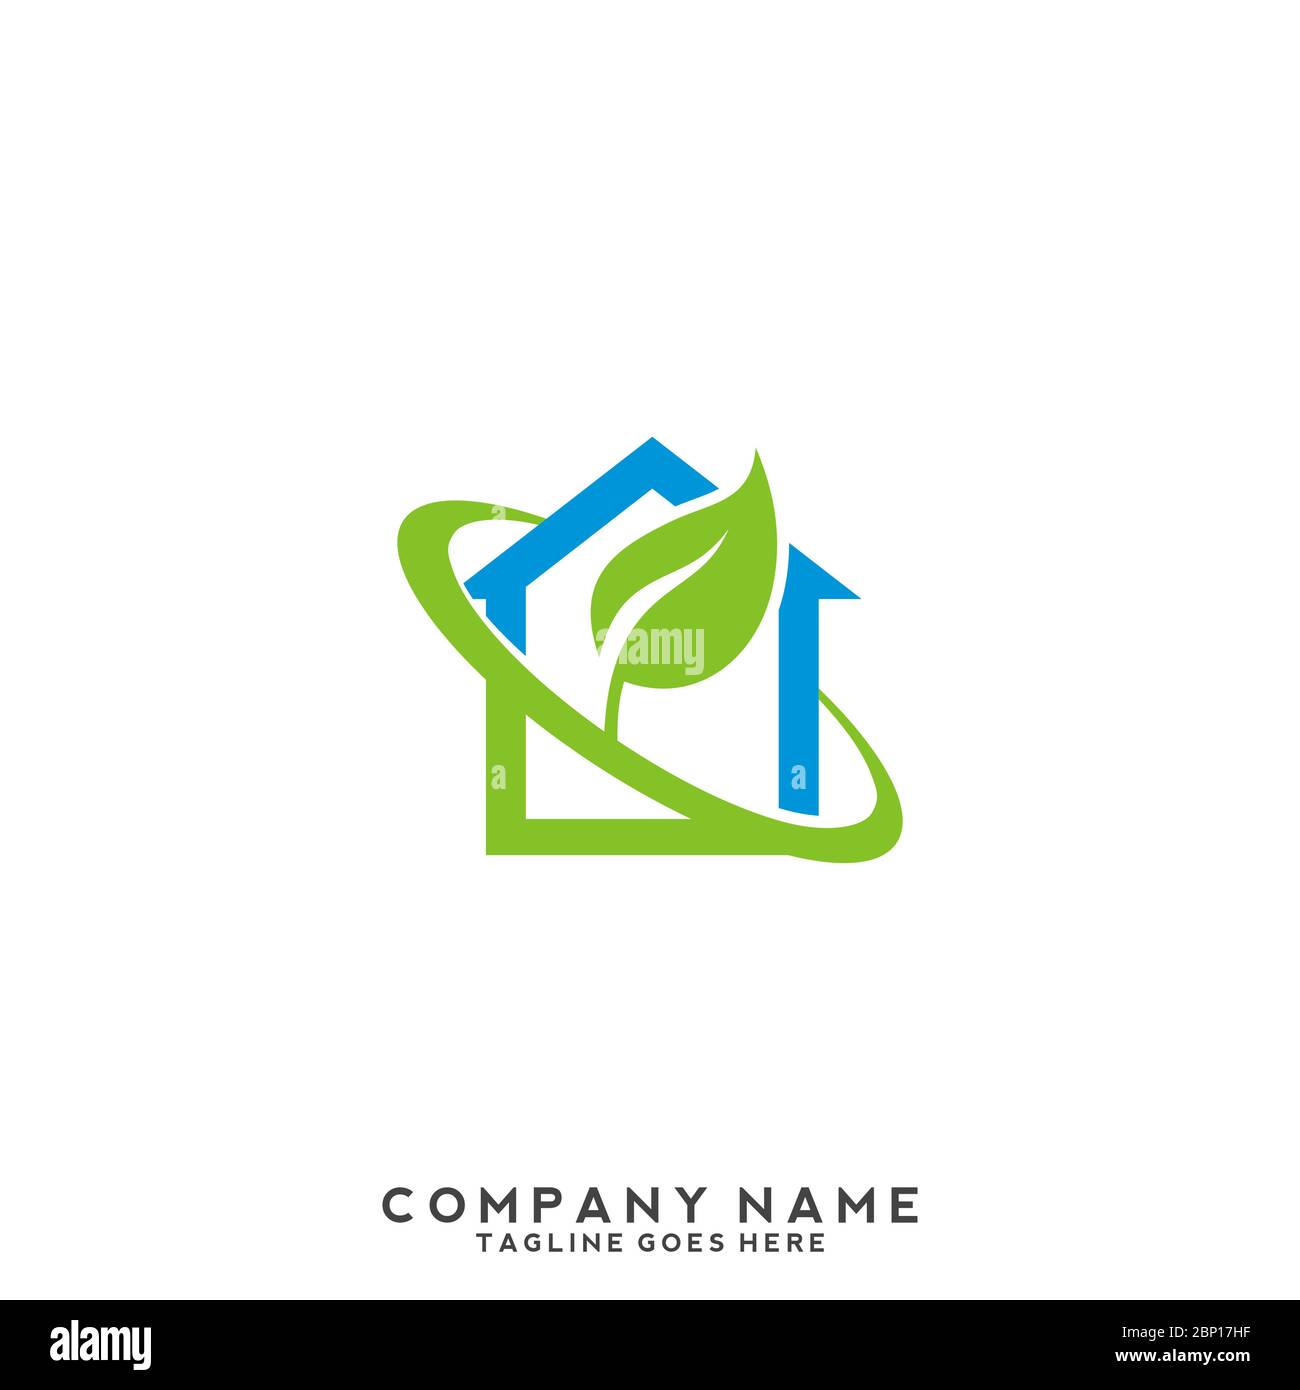 Real Estate Logo Design. Creative abstract real estate icon logo and business card template. Stock Vector